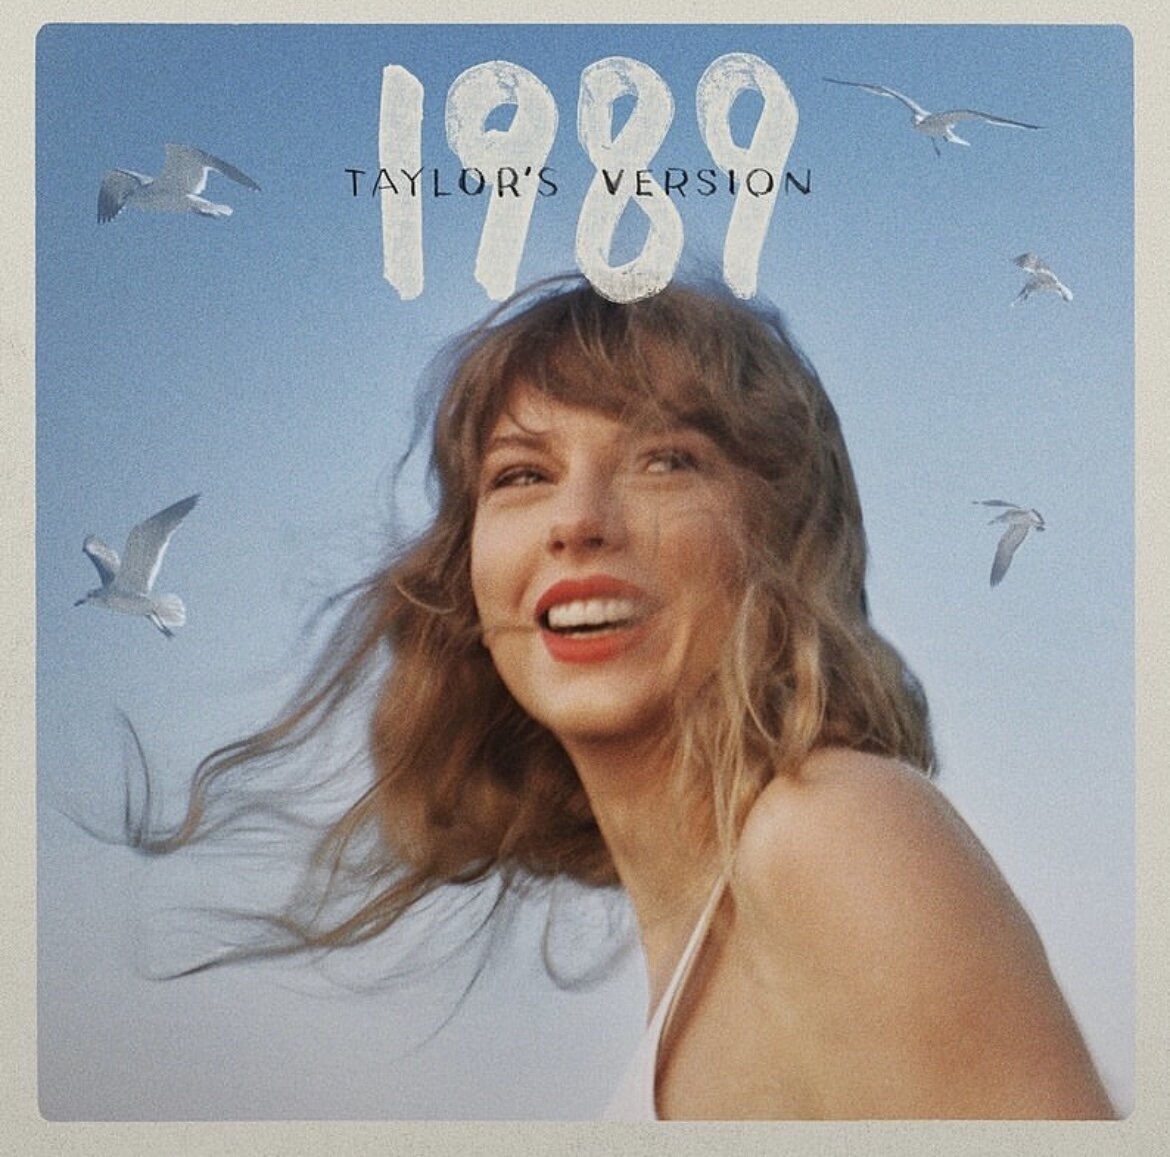 Тейлор версия. Тейлор Свифт 1989 Taylor's Version. Taylor Swift. 1989. 1989 Taylor Swift Taylor Version. Тейлор Свифт 1989 Taylor's Version обложка.